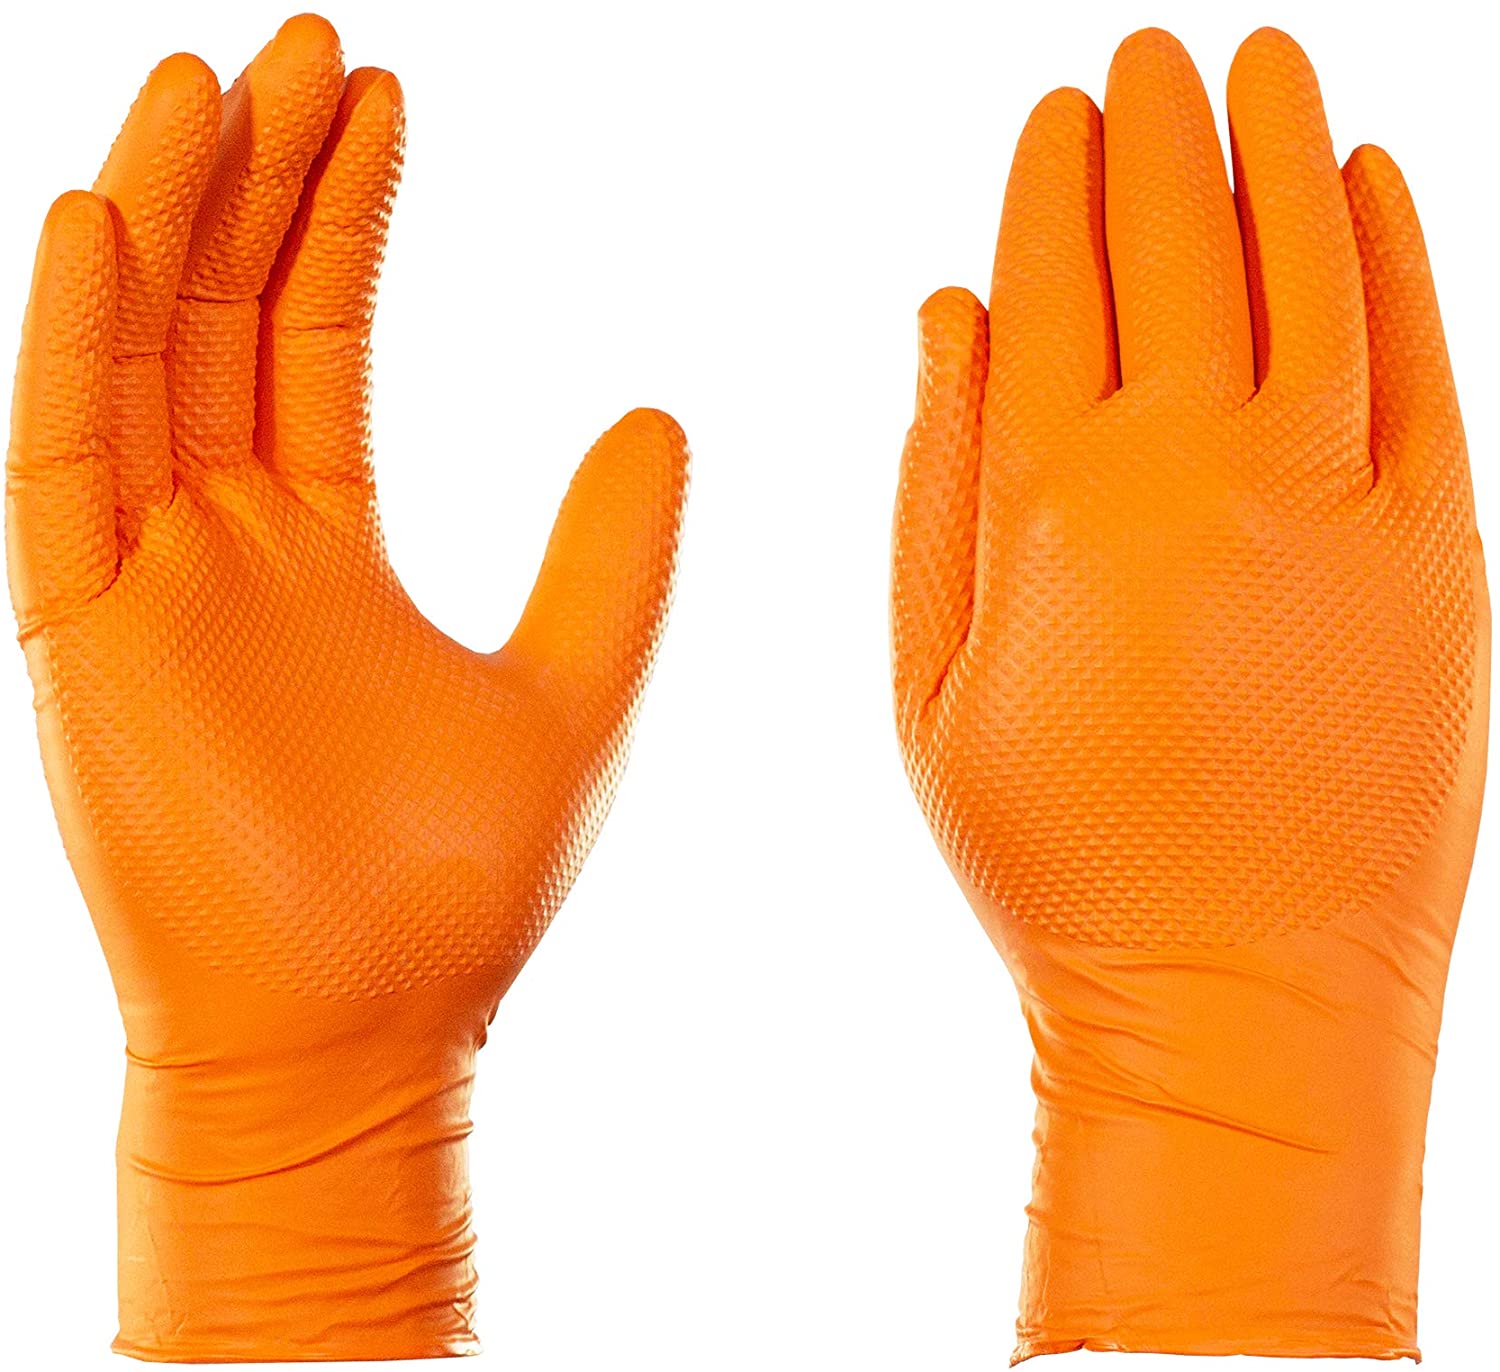 GLOVEWORKS HD Industrial Orange Nitrile Gloves with Raised Diamond Texture Grip - Maazzo